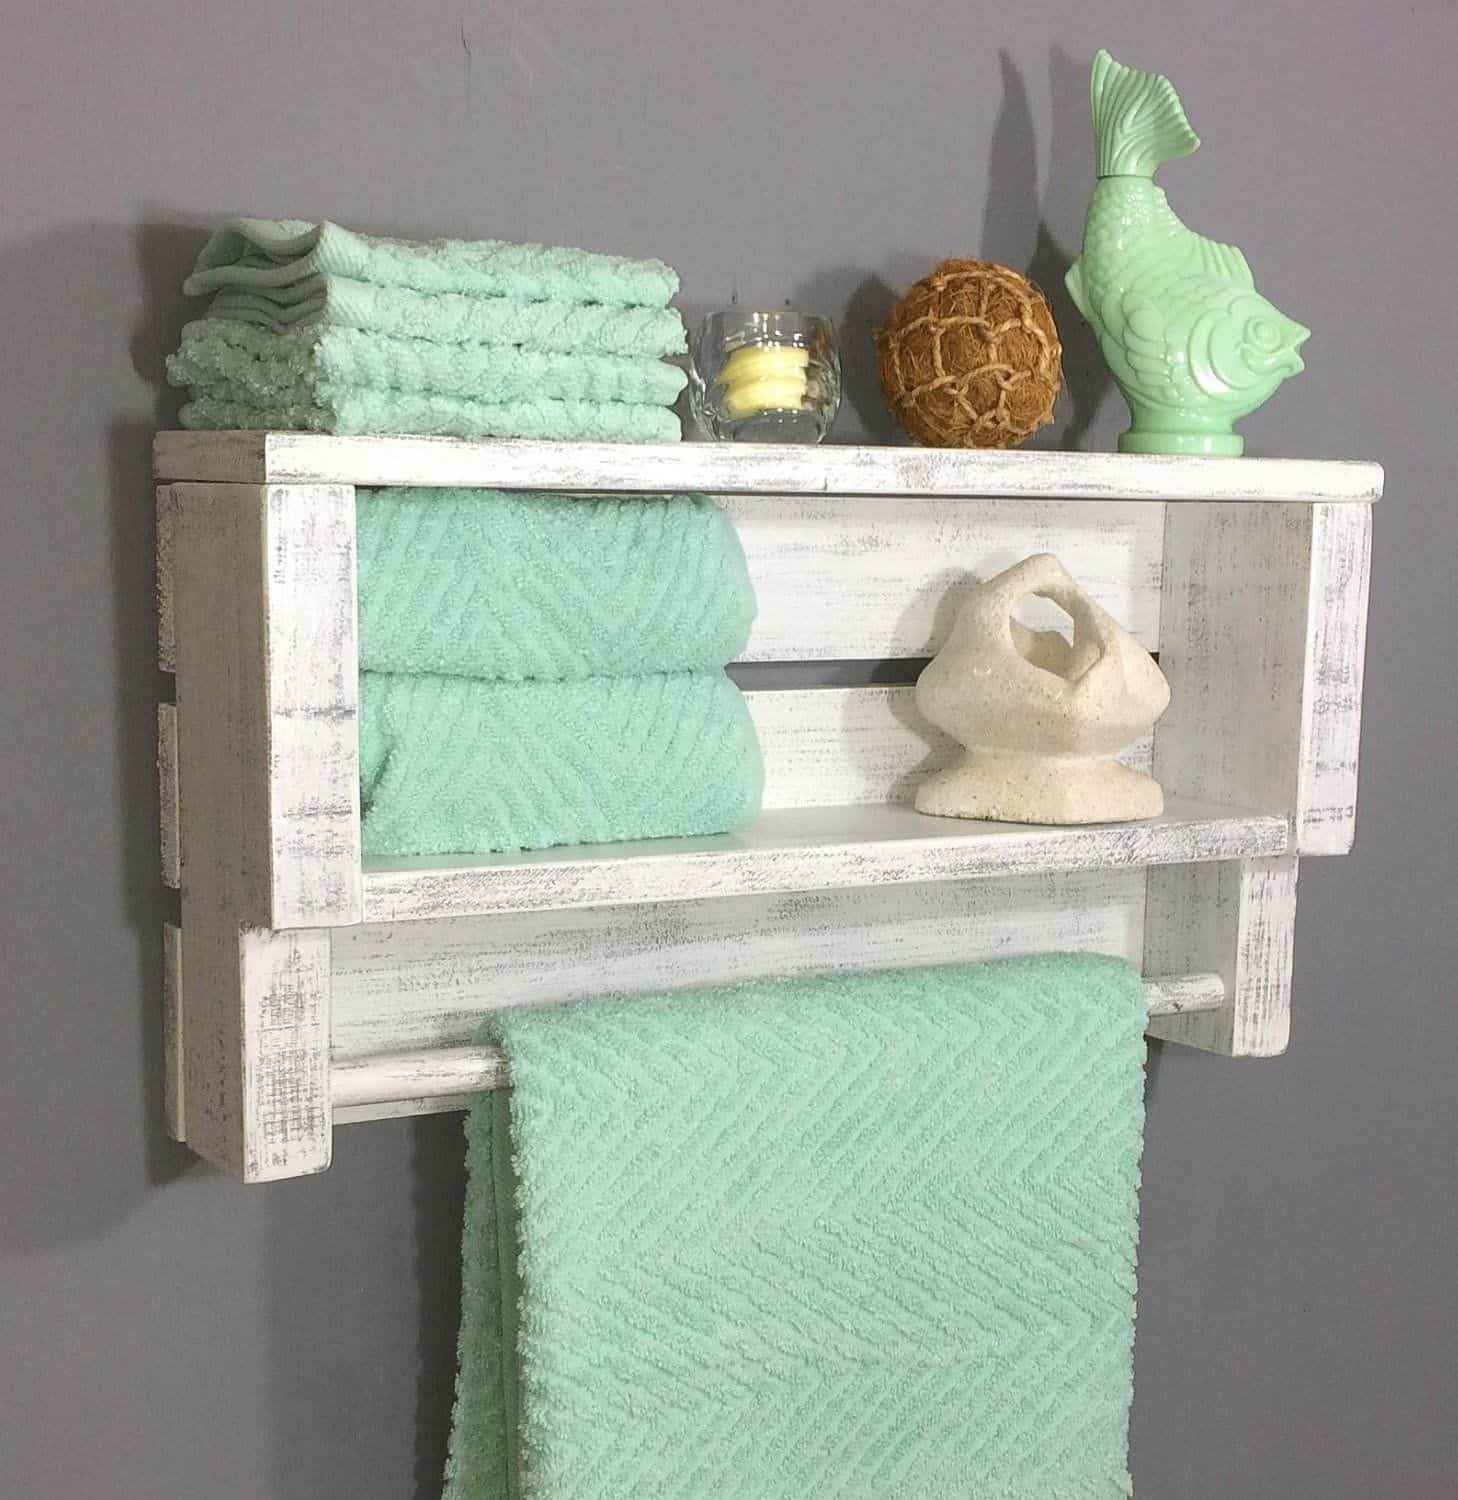 Towel Bar With Shelf For The Bathroom